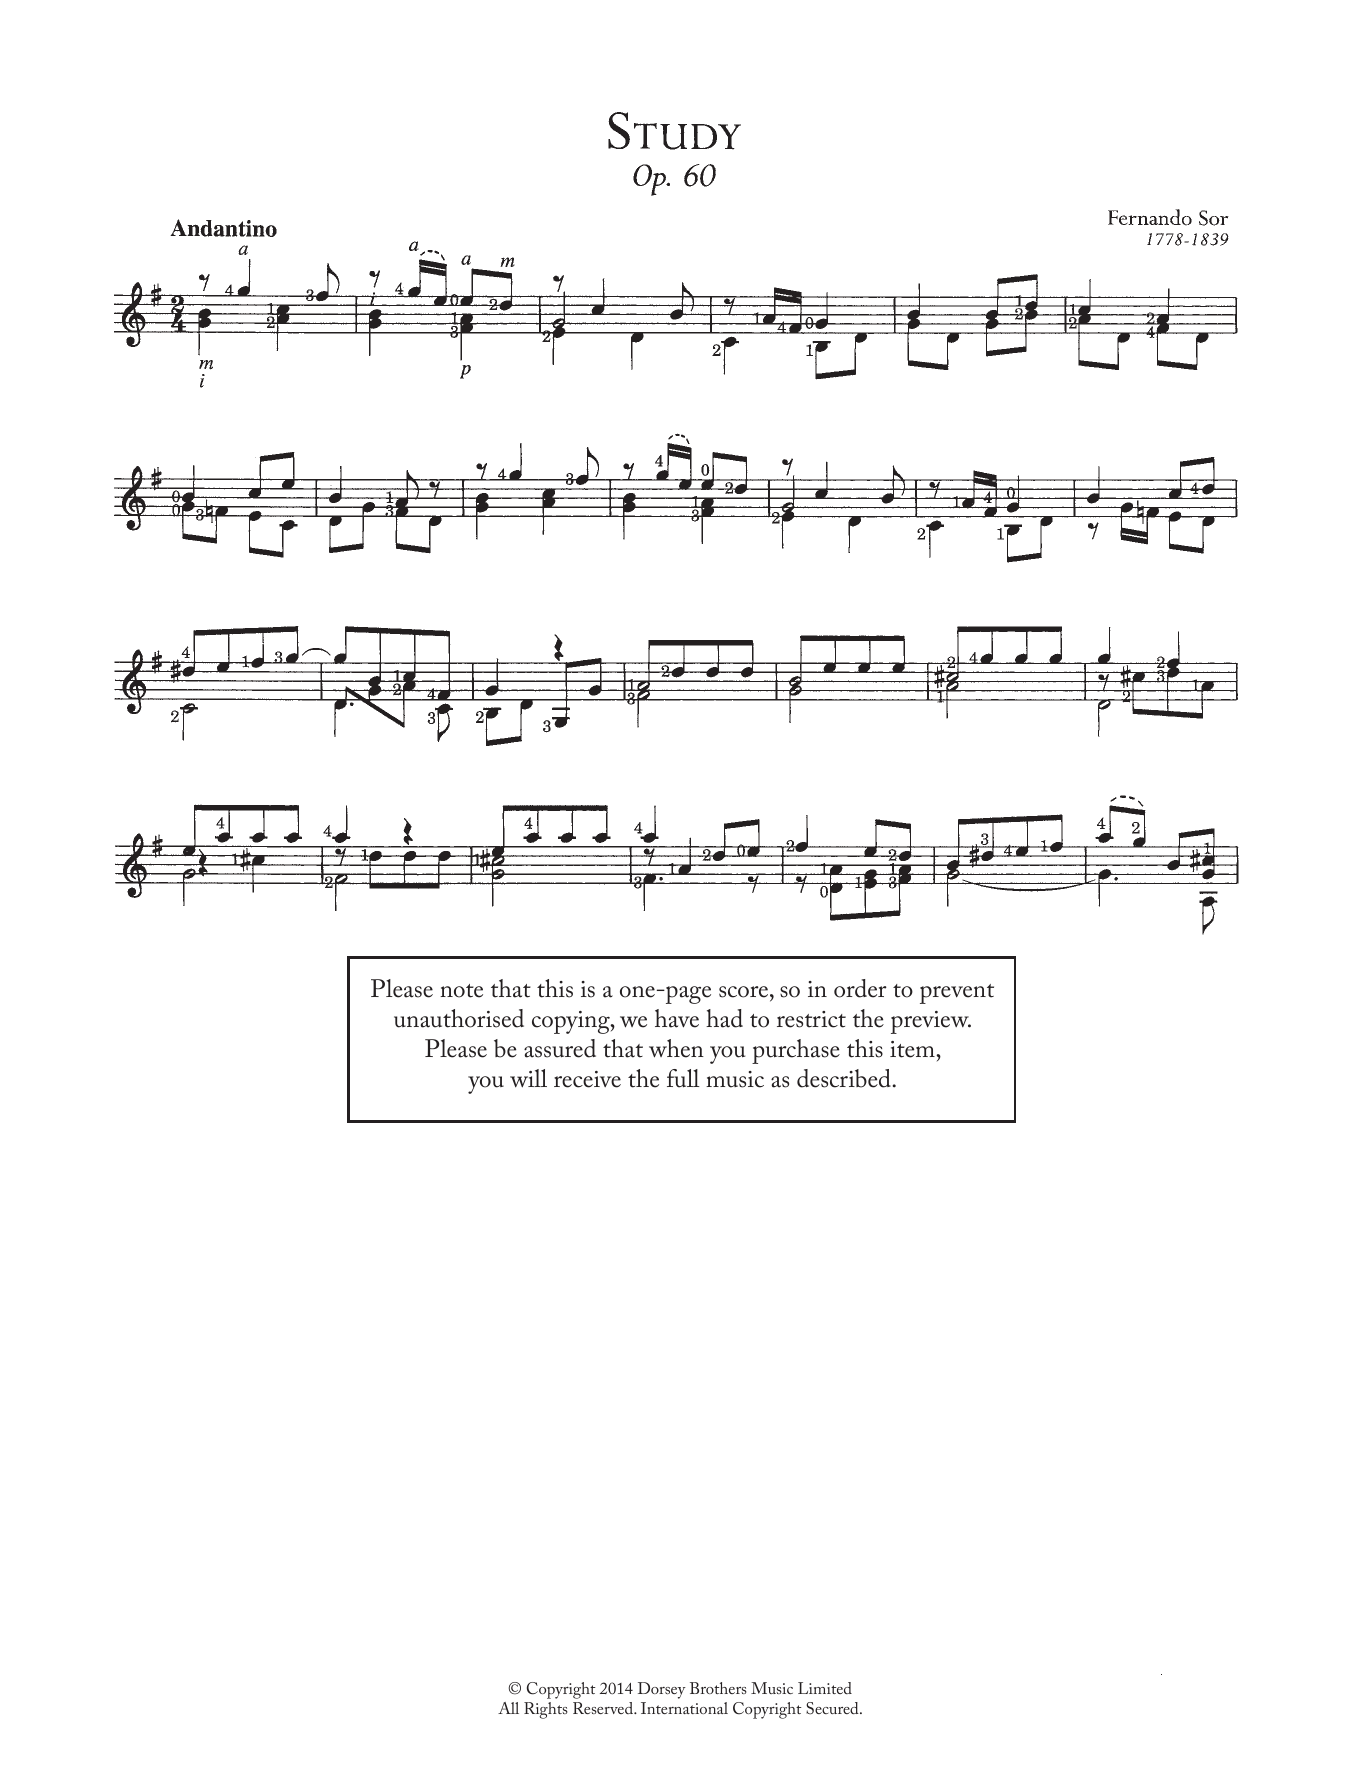 Fernando Sor Study, Op.60, No.16 Sheet Music Notes & Chords for Easy Guitar - Download or Print PDF